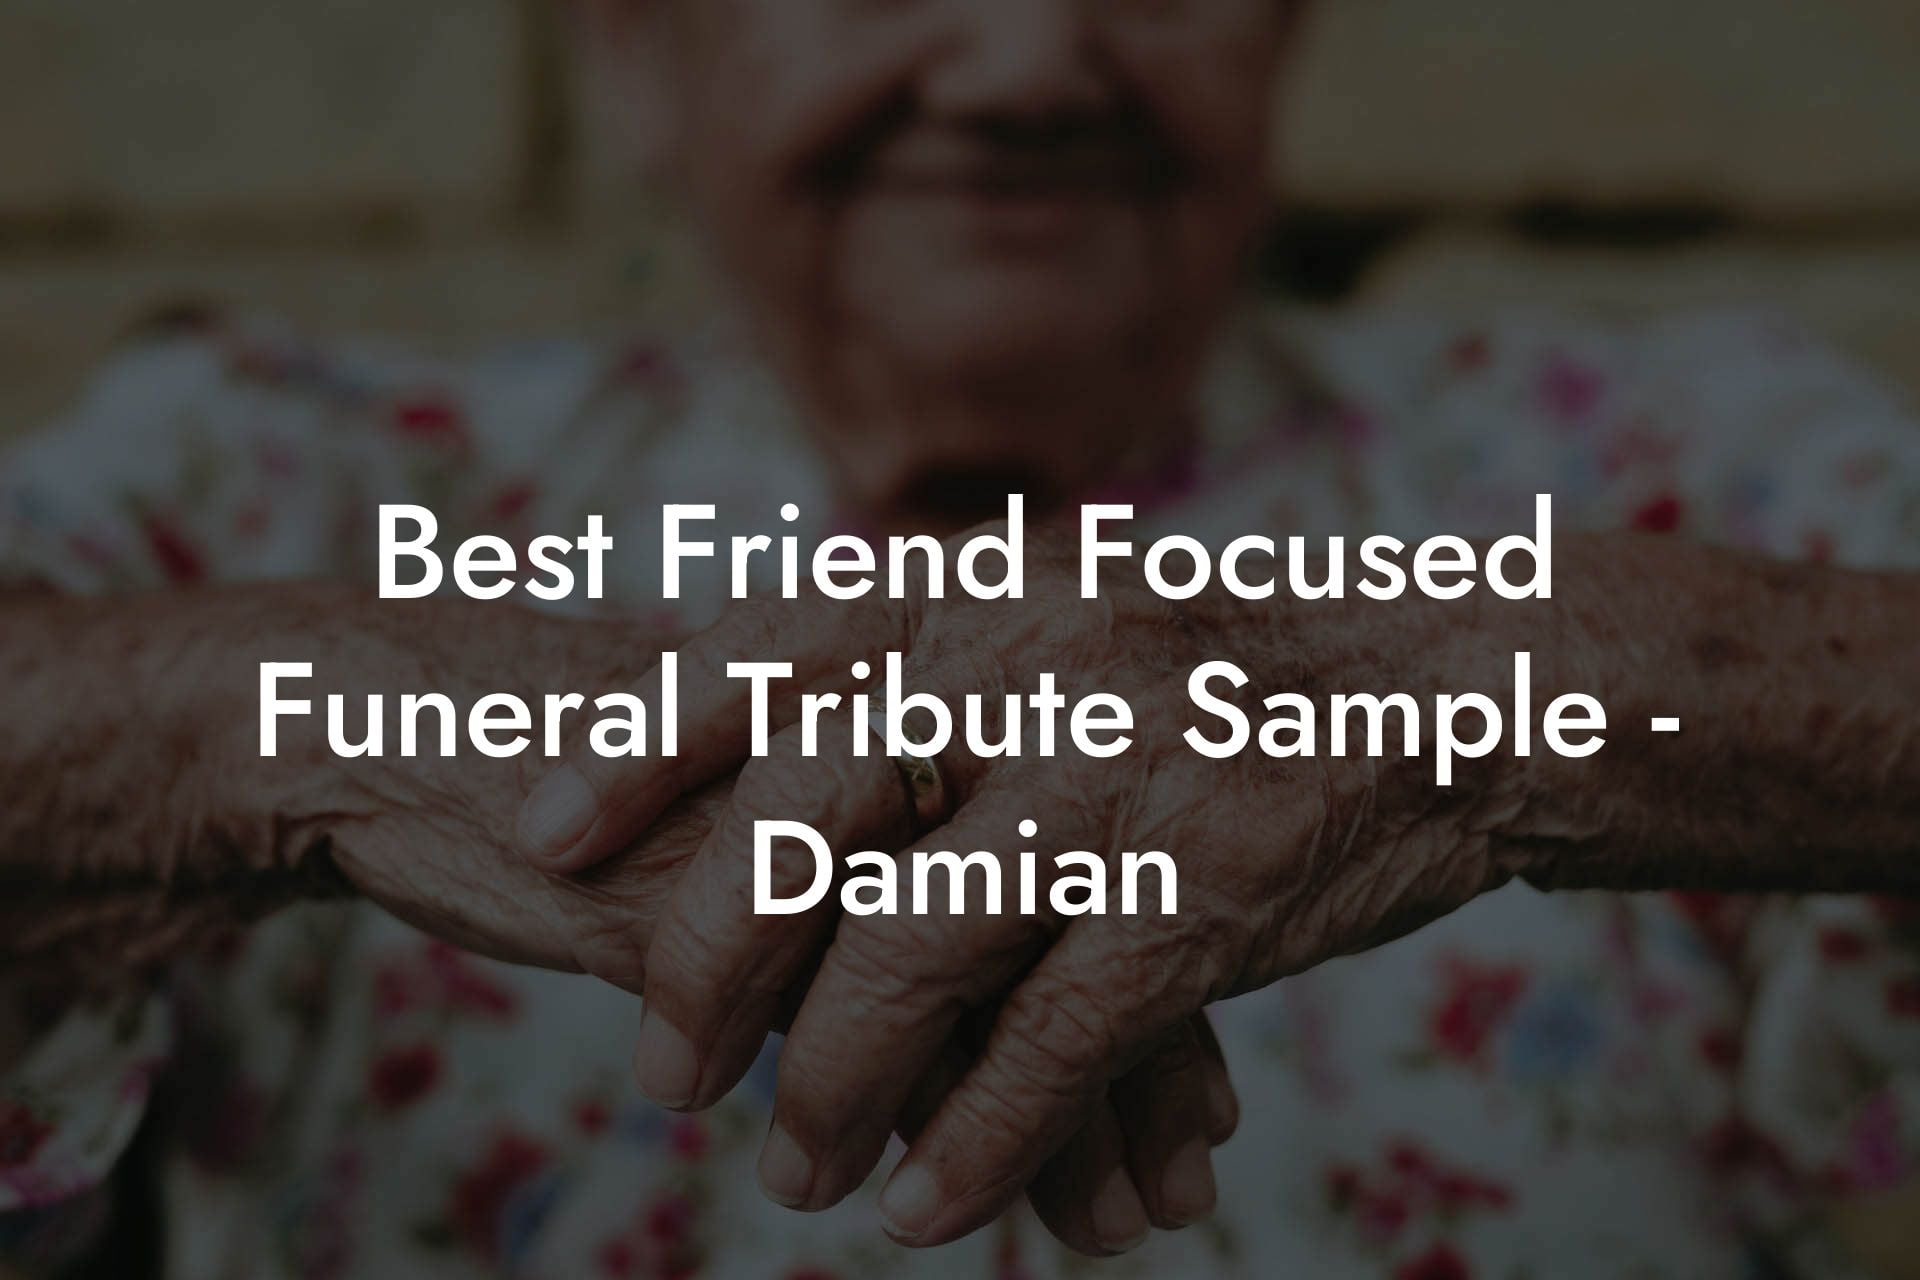 Best Friend Focused Funeral Tribute Sample - Damian